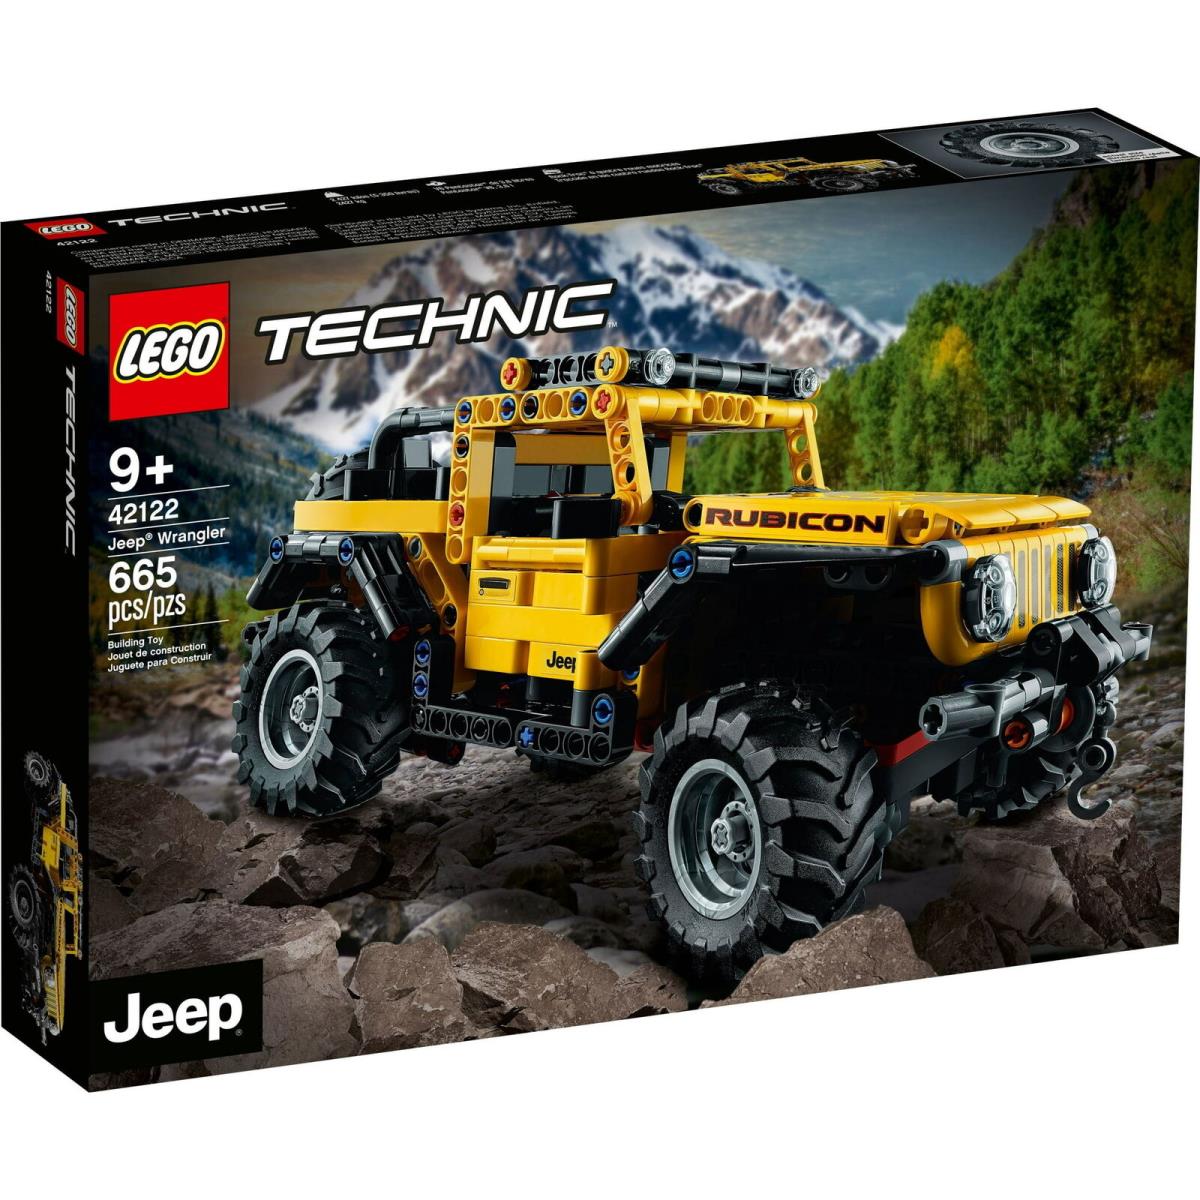 Lego Technic Jeep Wrangler 4x4 Toy Car 42122 Building Set Gift